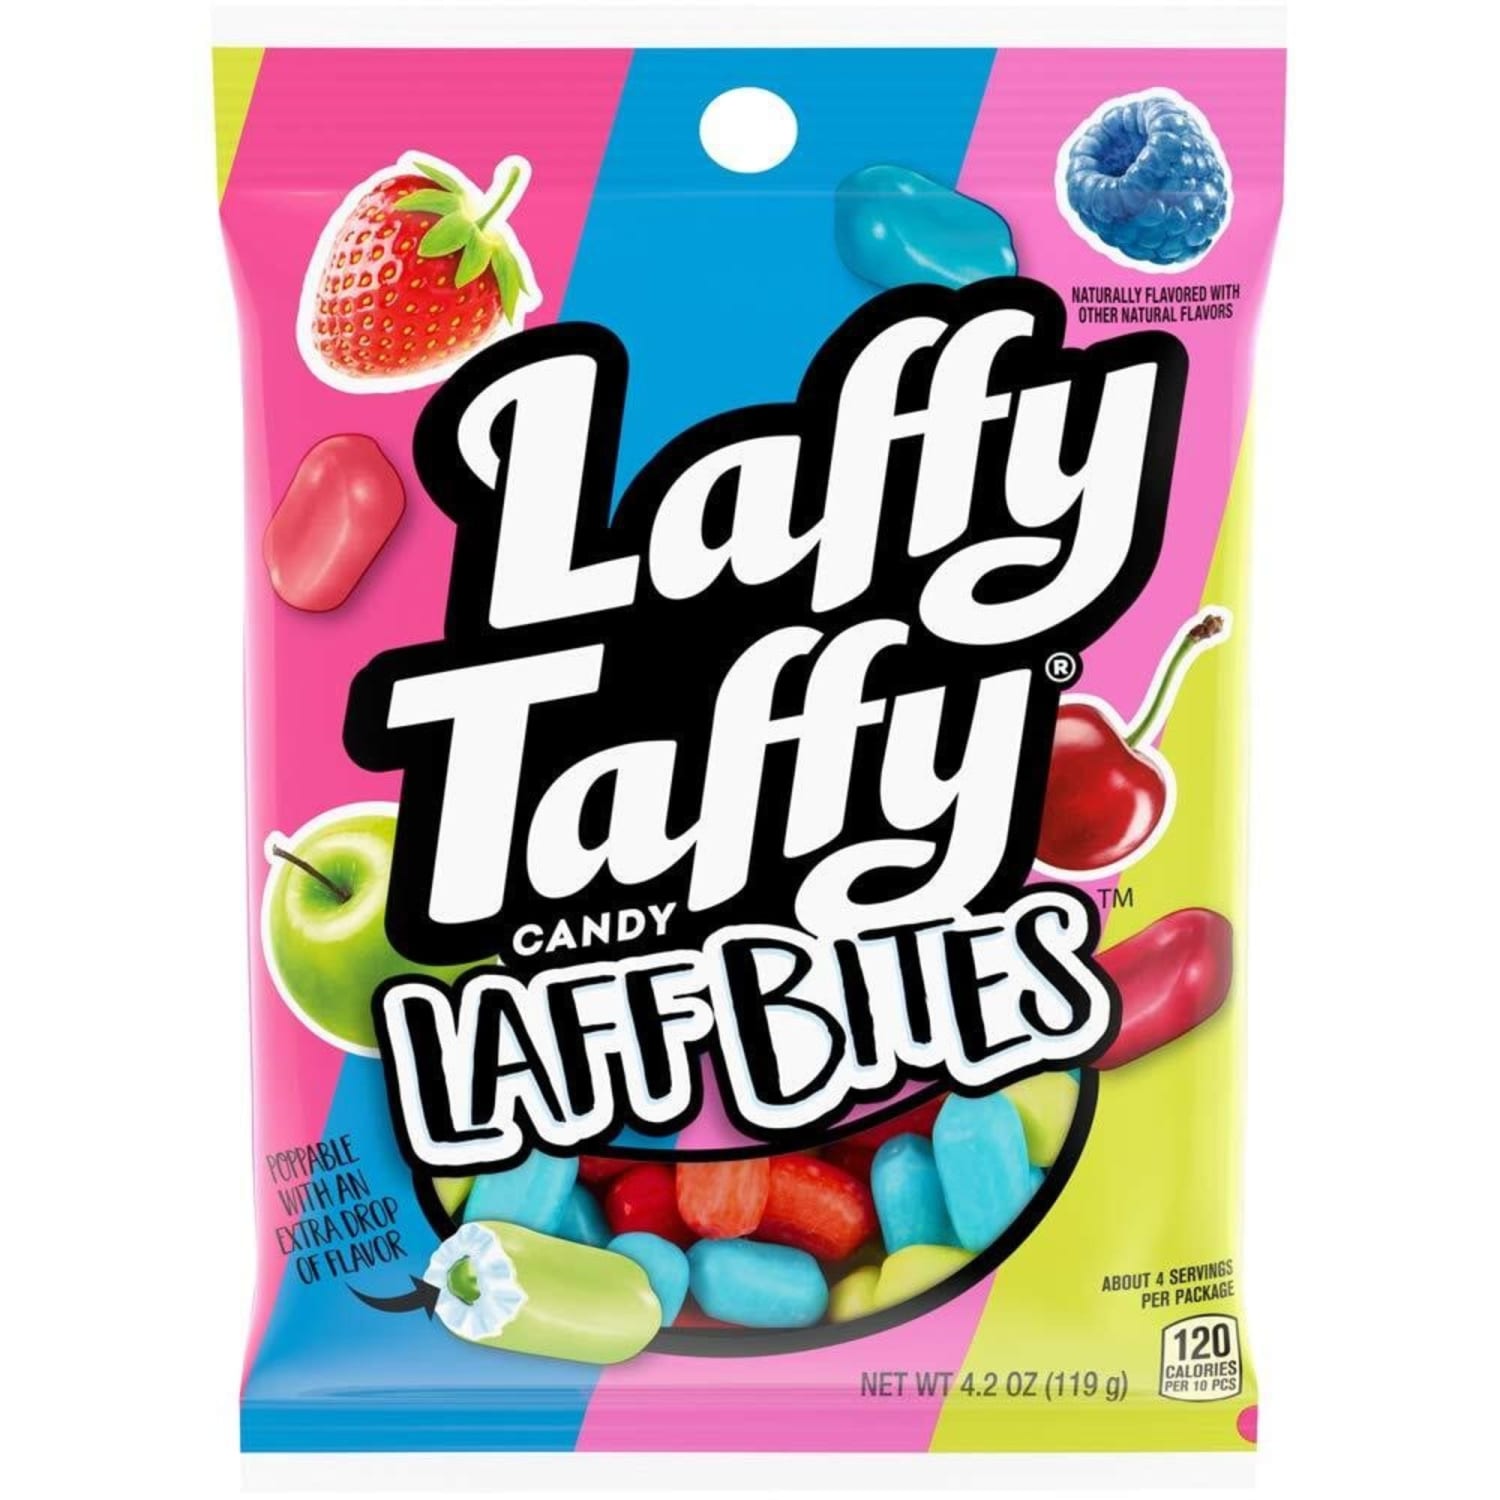 Laffy Taffy Laff Bites bring candy innovation to snack time